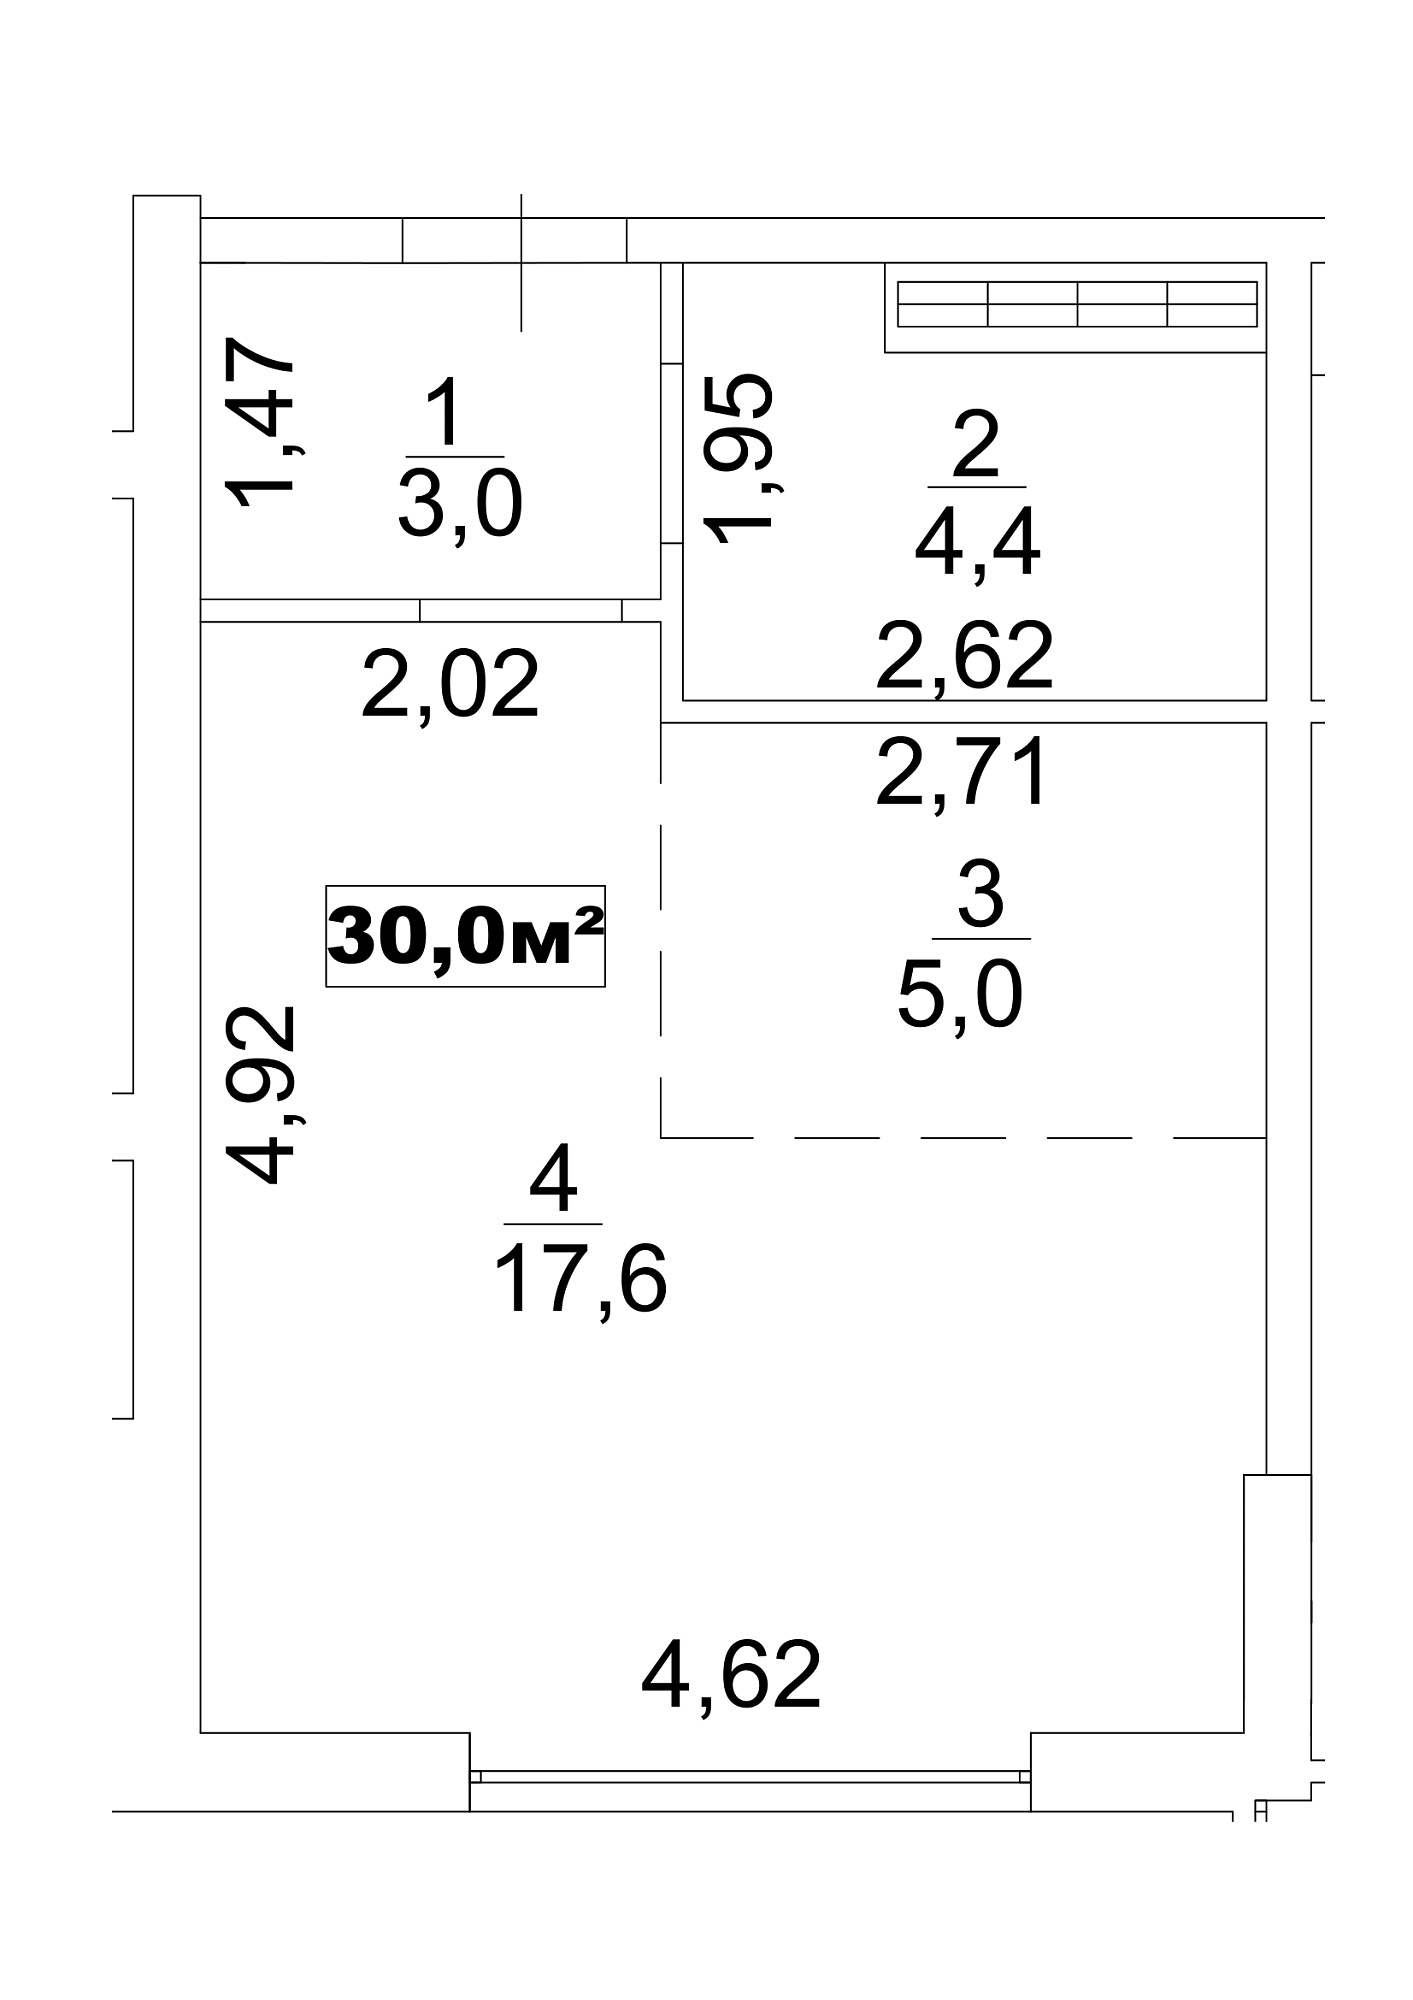 Planning Smart flats area 30m2, AB-13-05/00042.